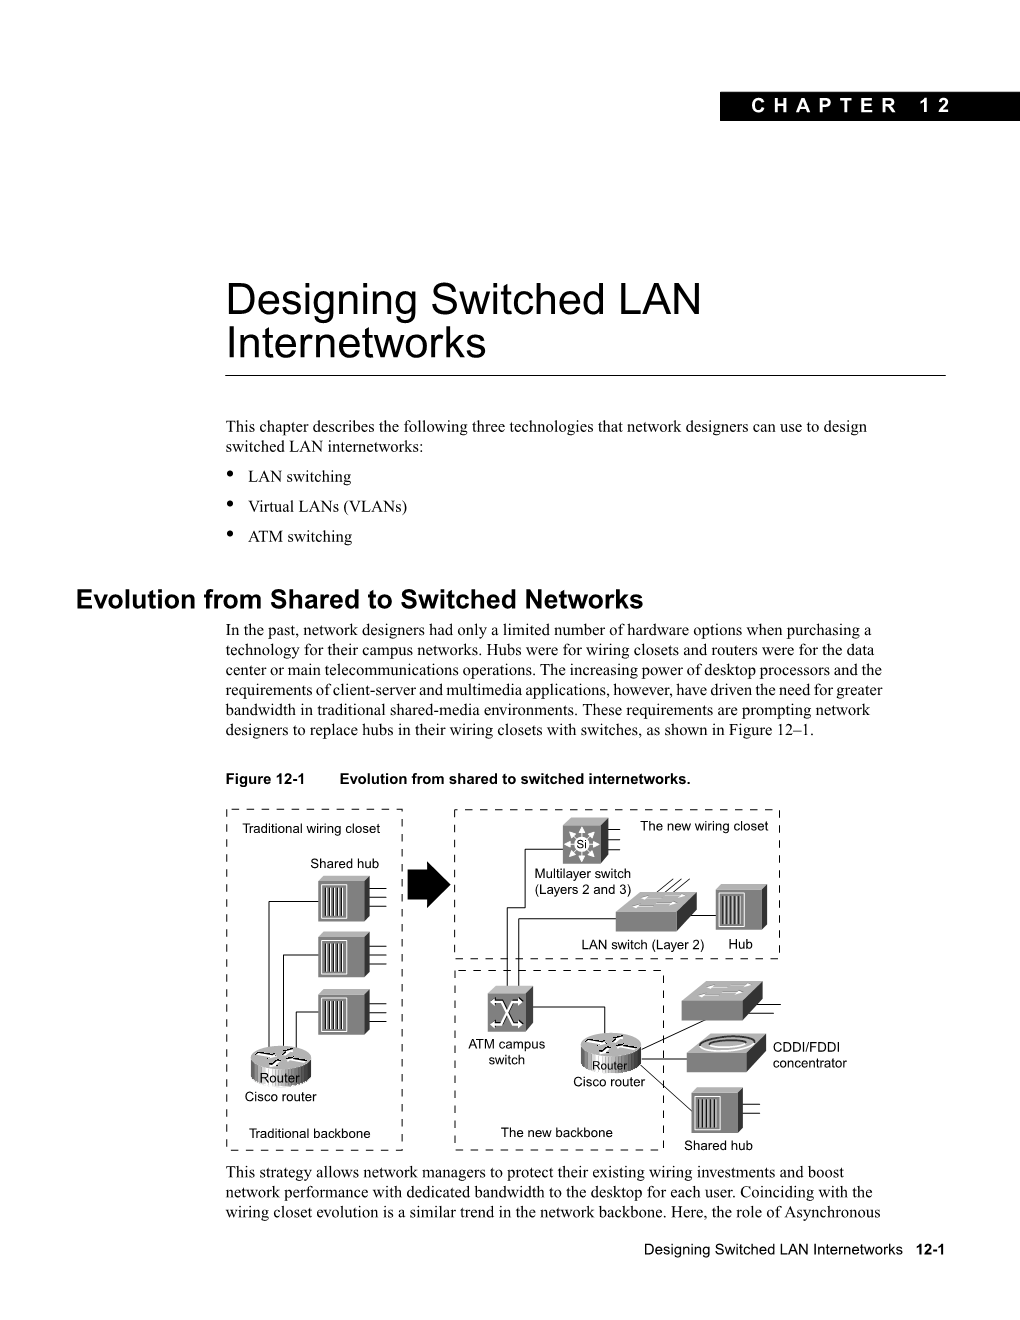 Designing Switched LAN Internetworks